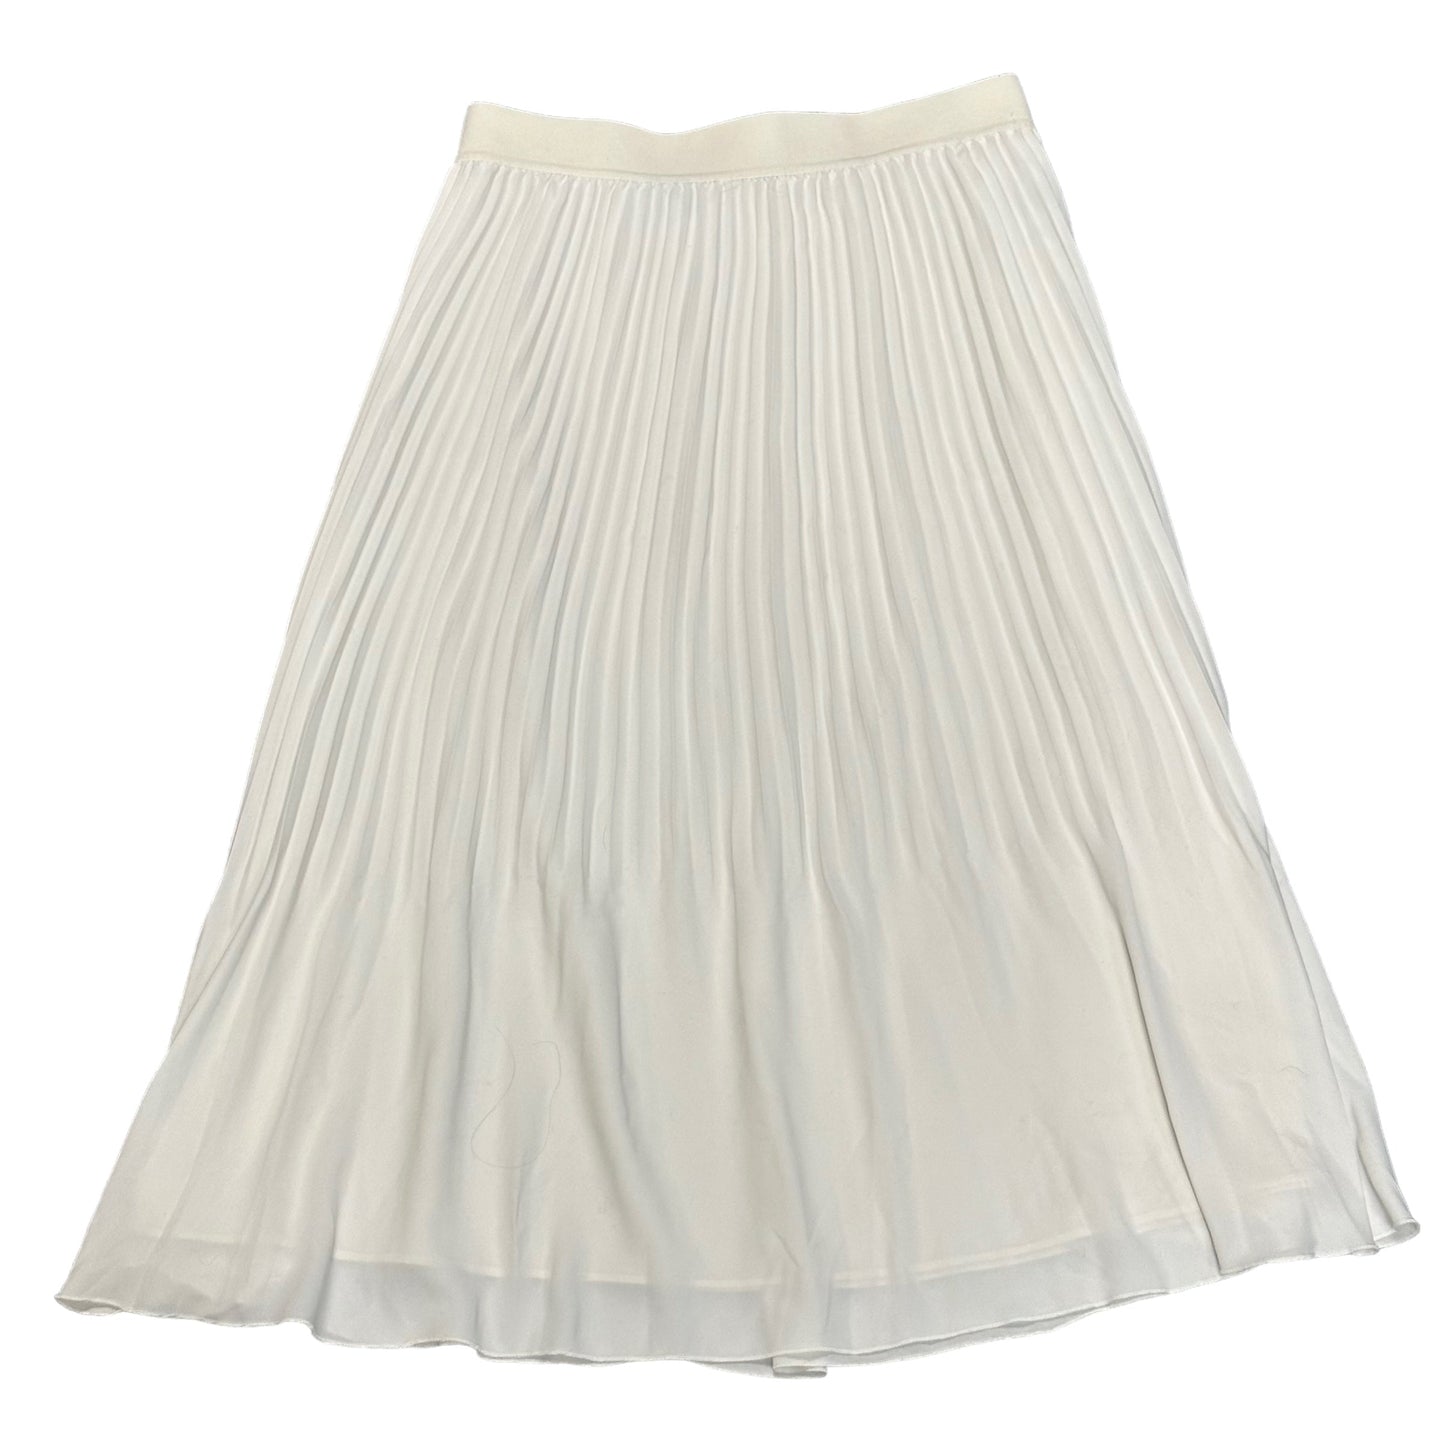 Skirt Midi By J Crew  Size: 8